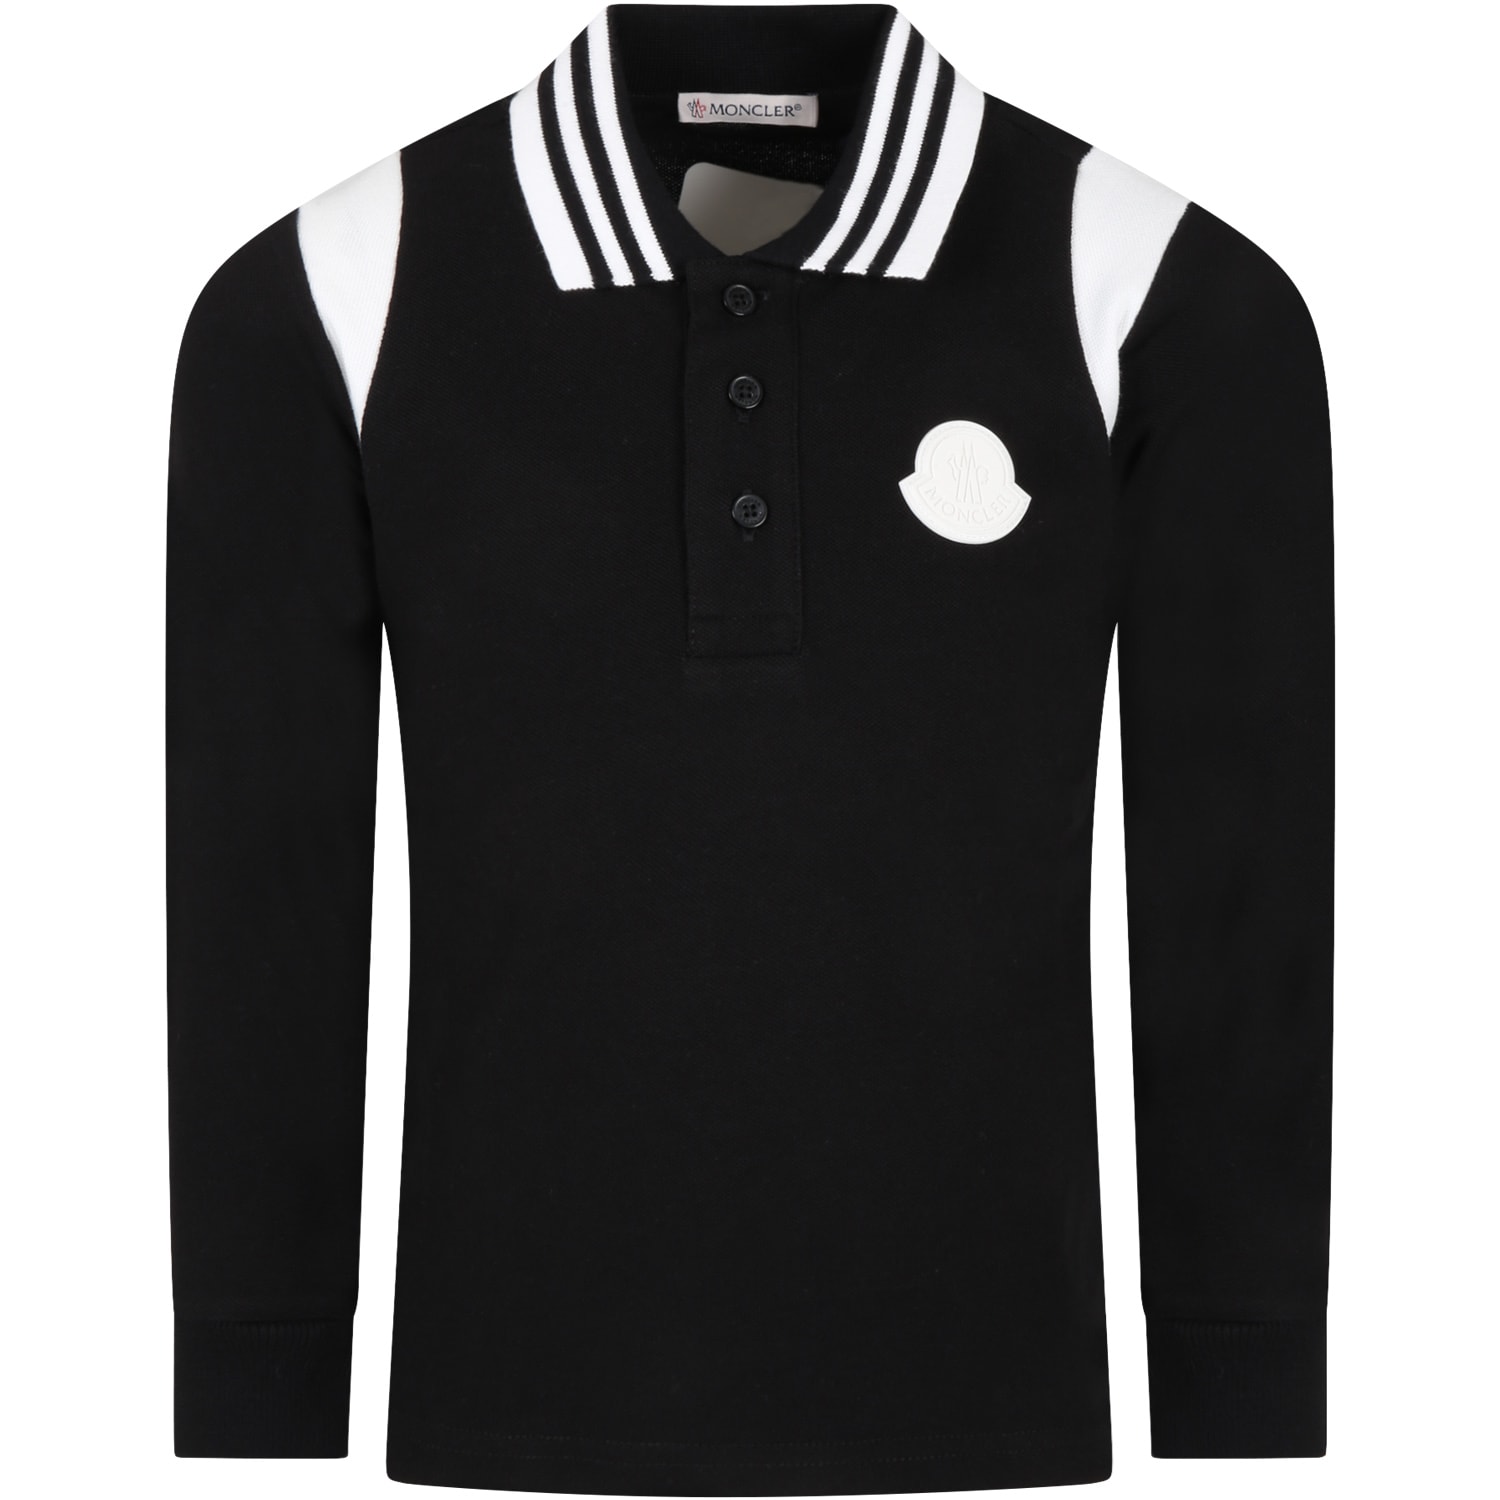 Moncler Black Polo For Boy With White Logo